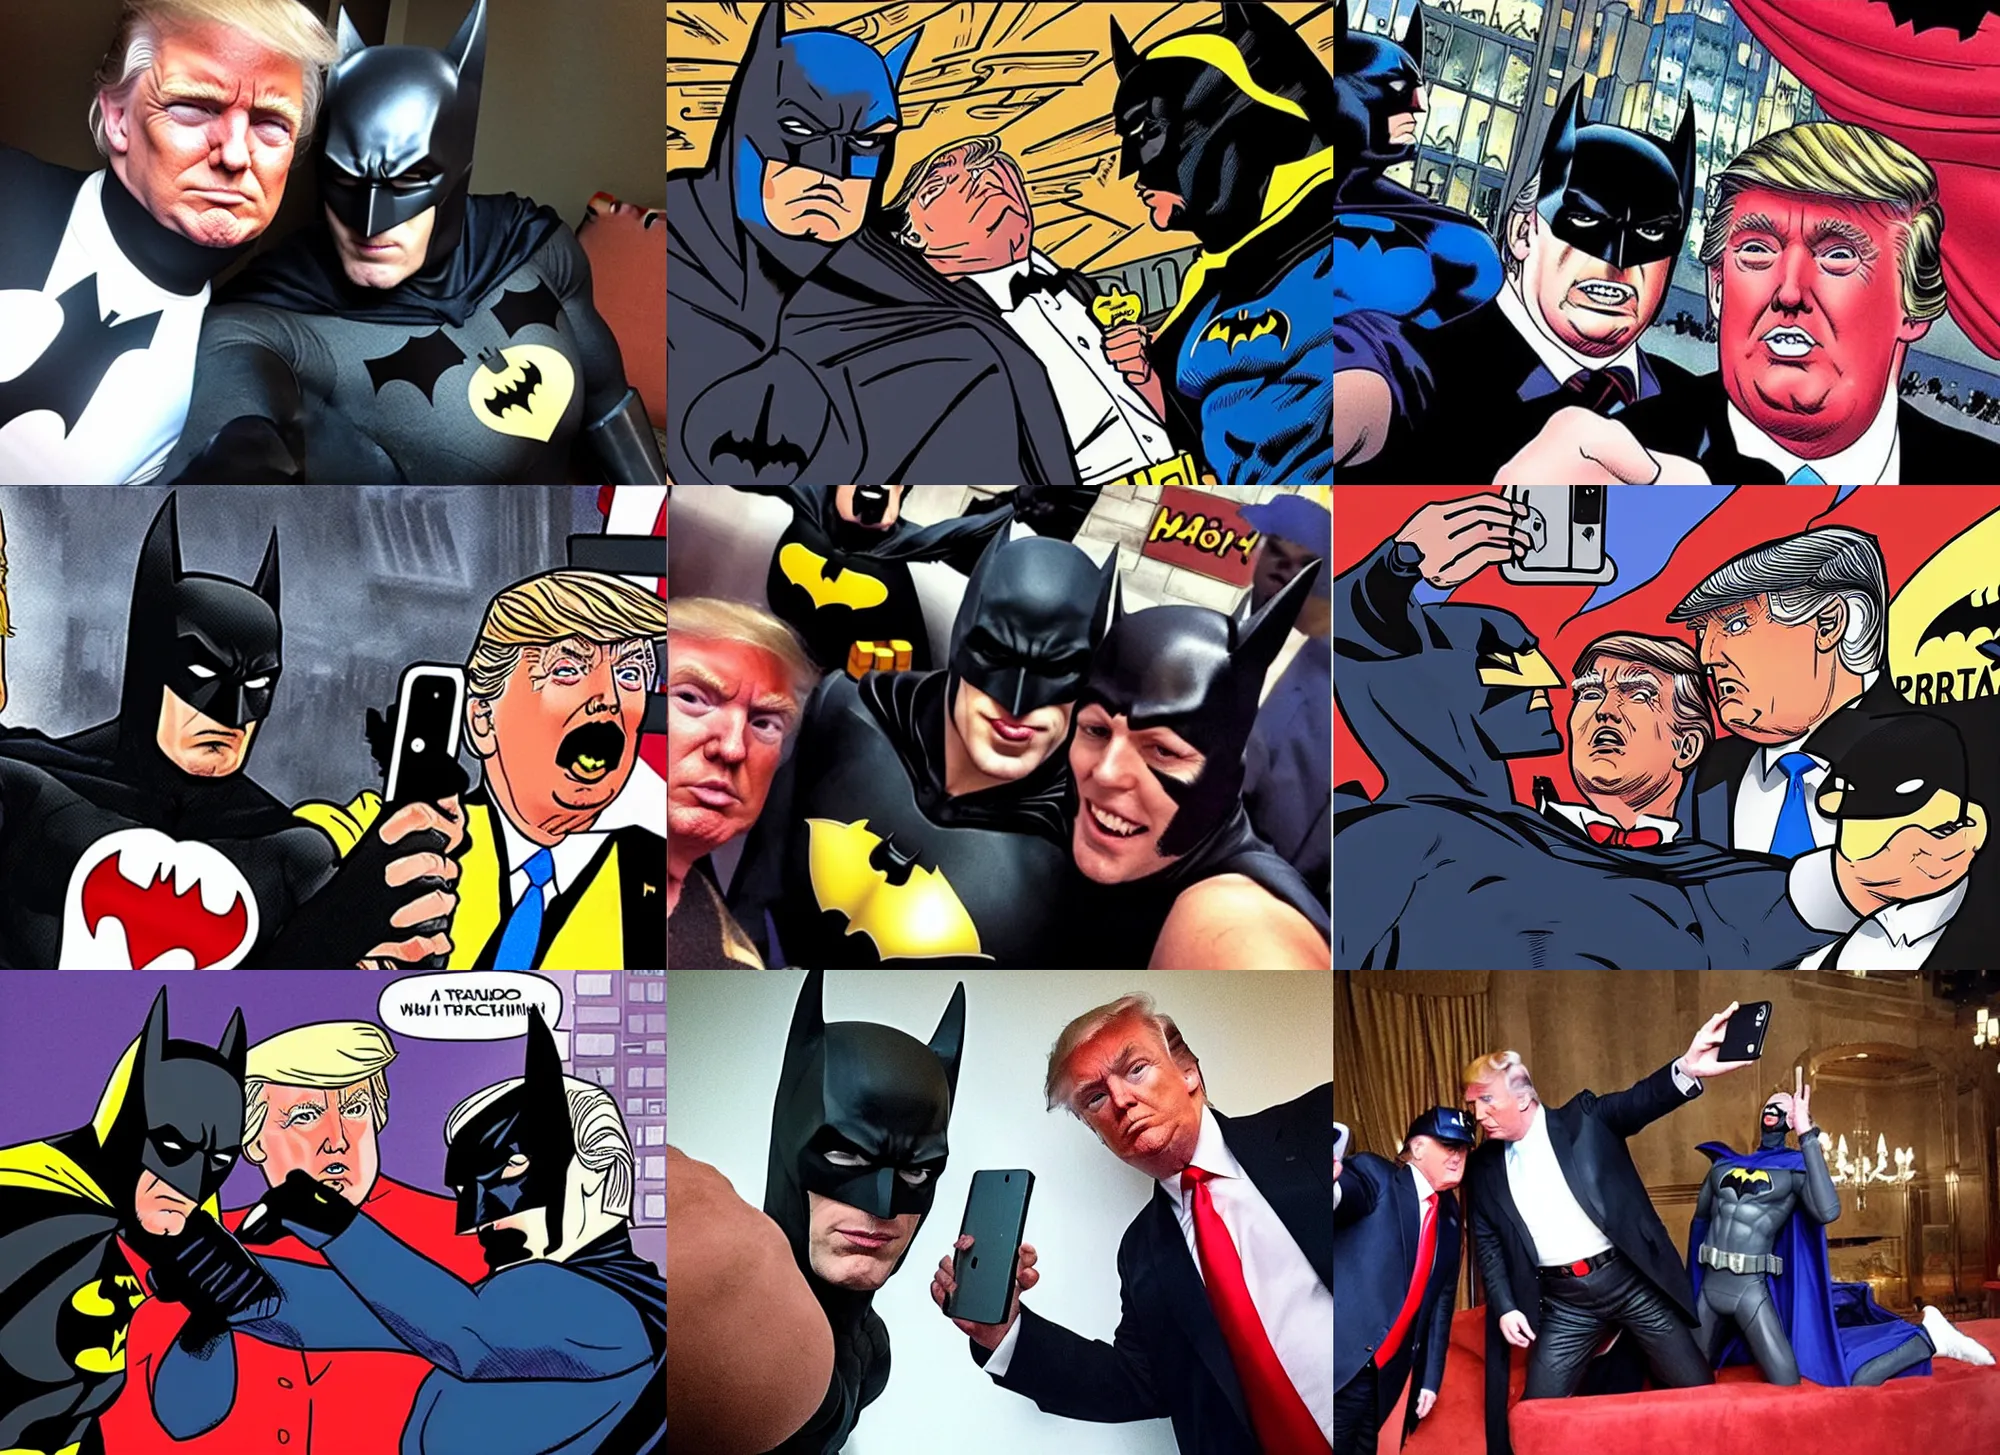 Prompt: Batman taking a selfie with Donald Trump